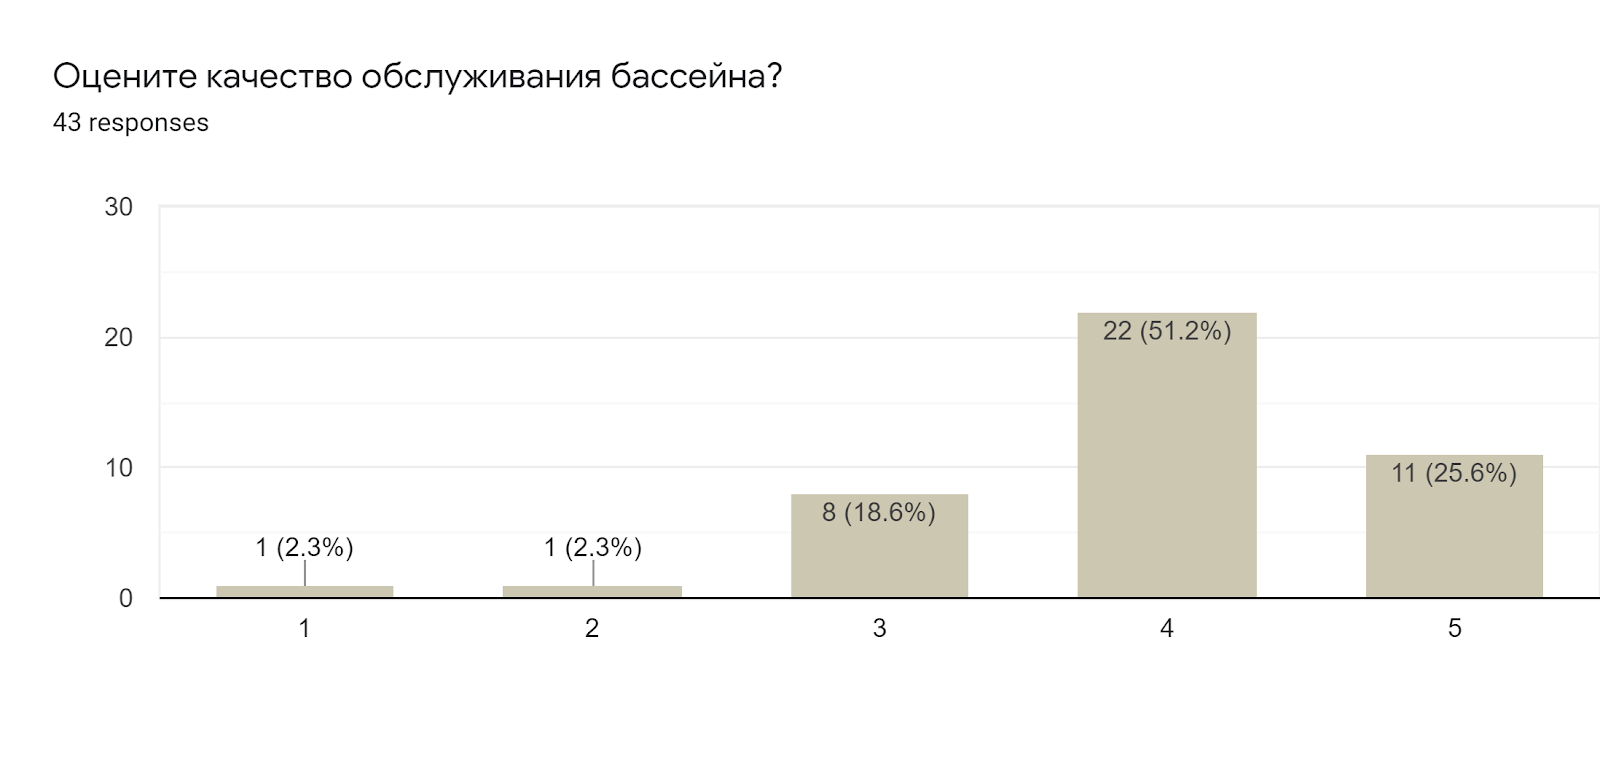 Forms response chart. Question title: Оцените качество обслуживания бассейна?. Number of responses: 43 responses.